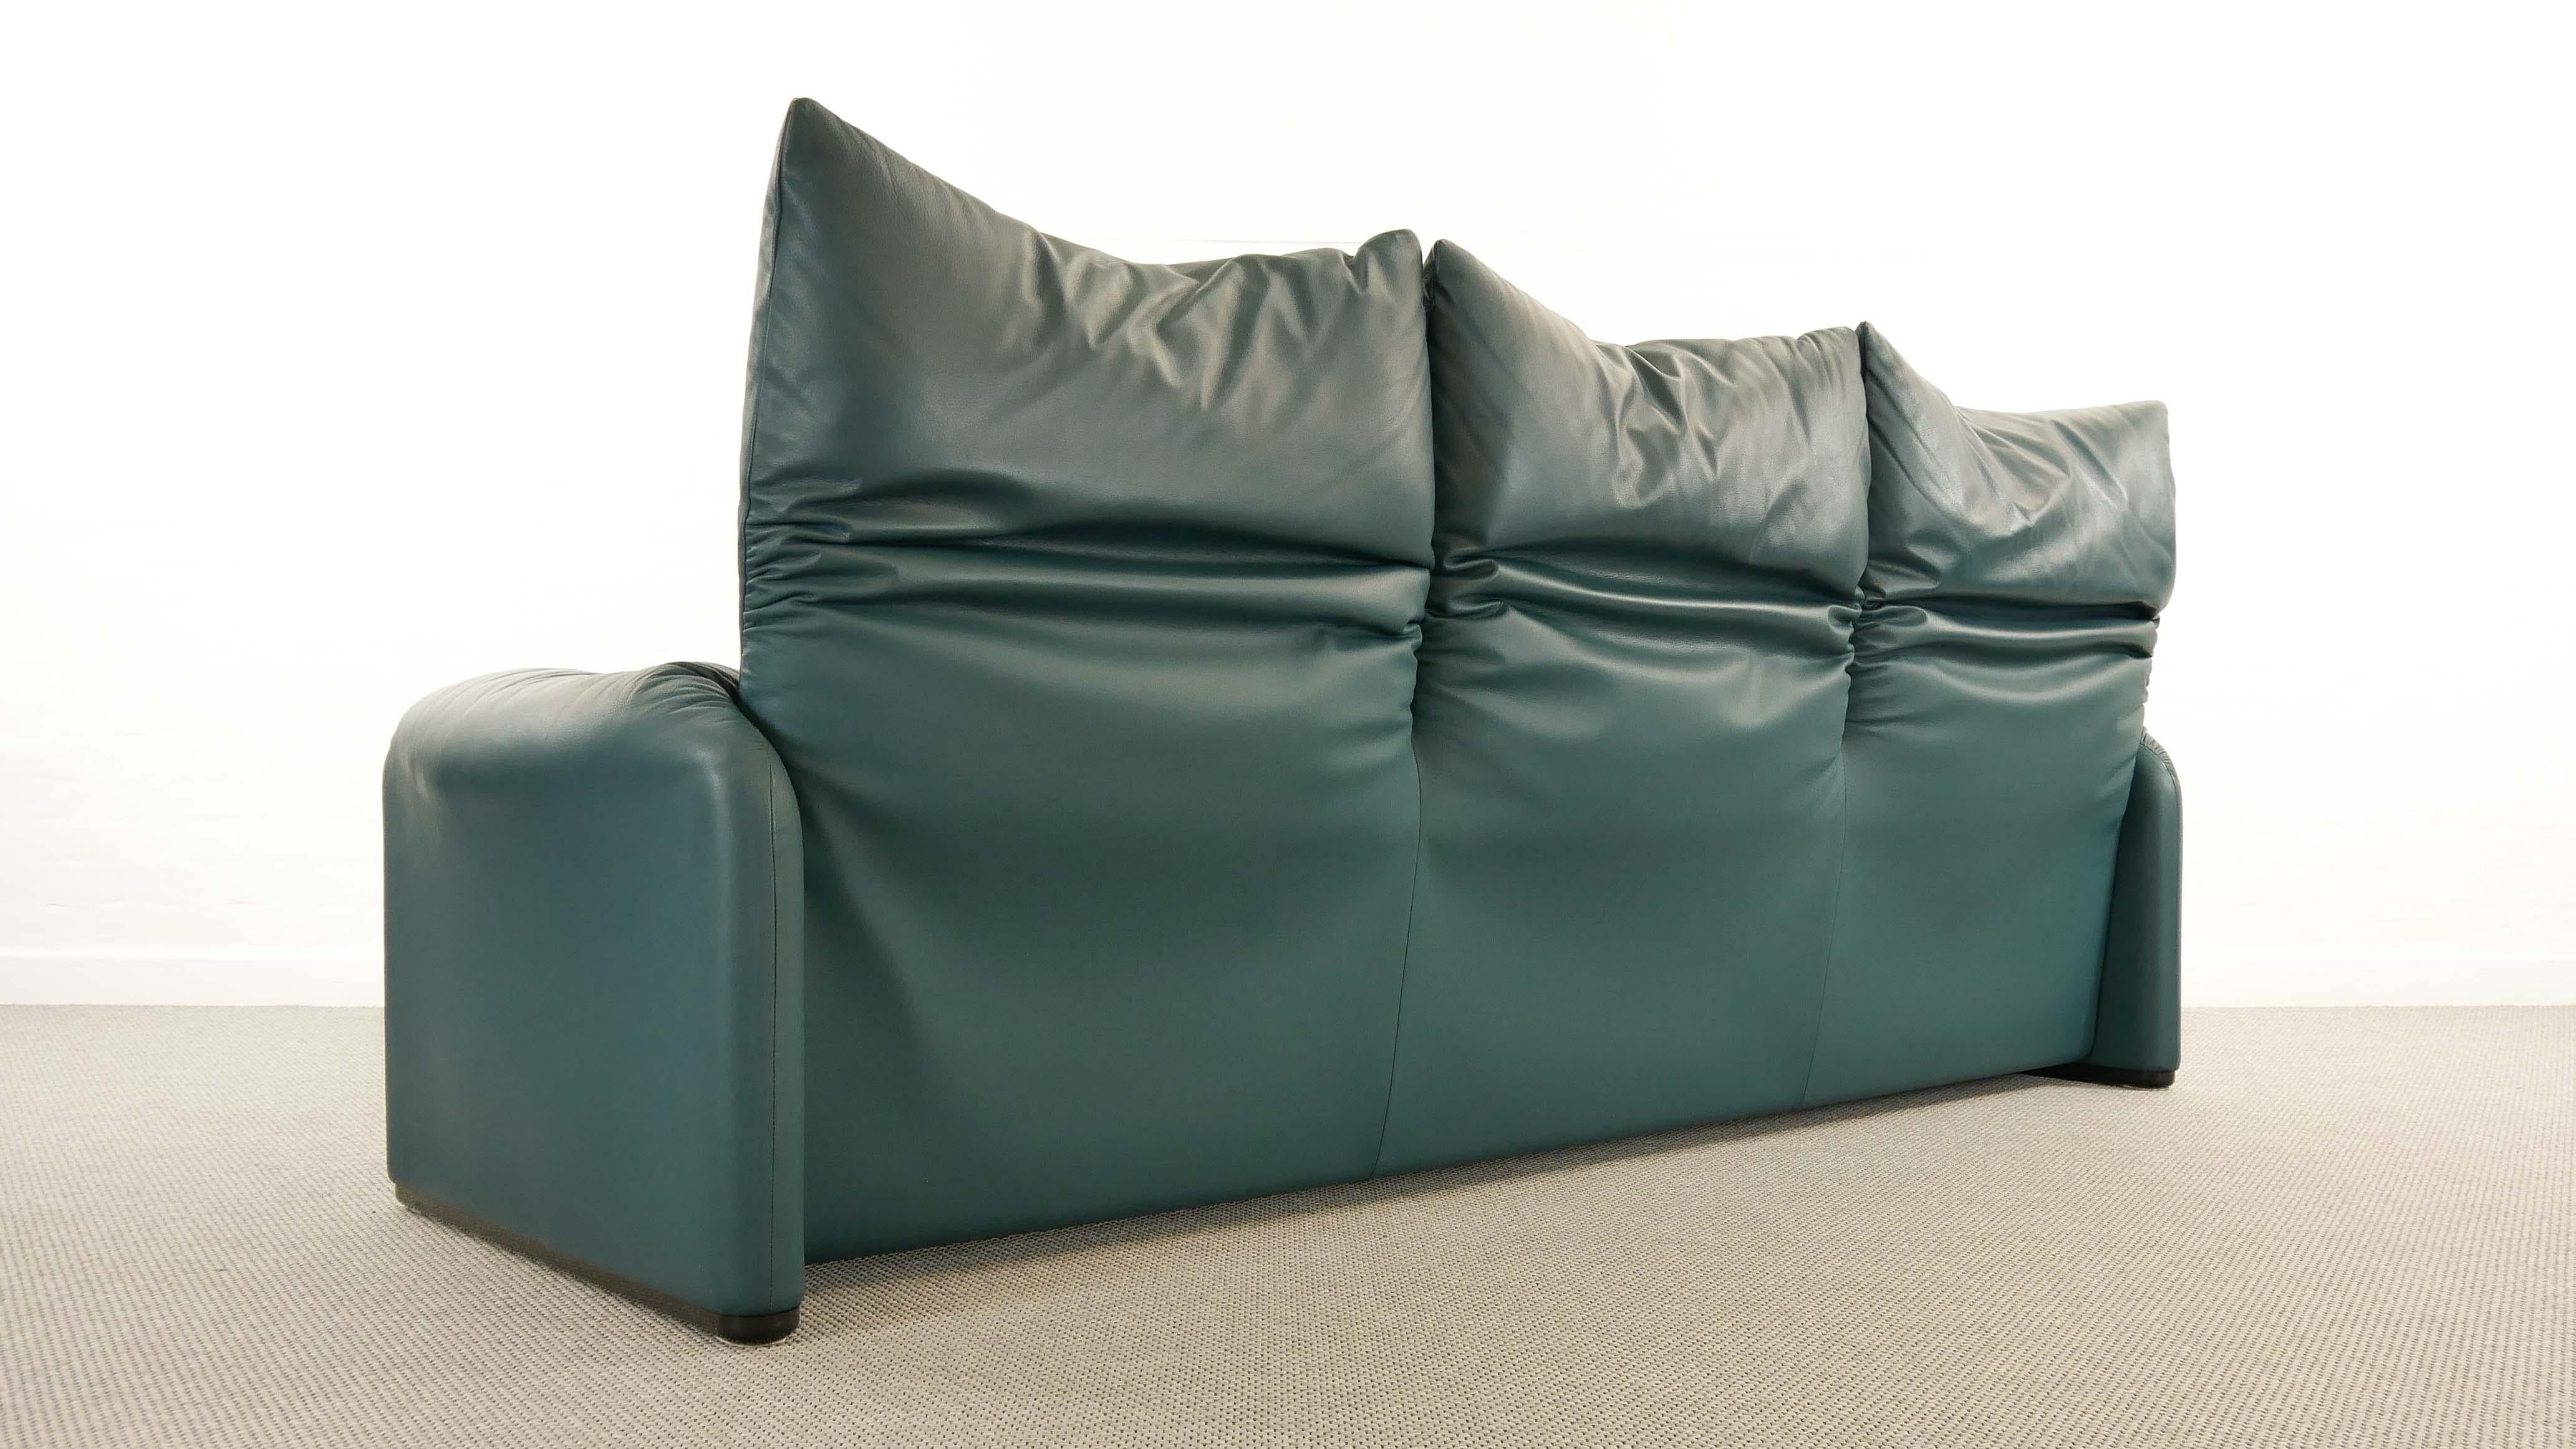 Cassina Maralunga 3-Seat Sofa by Vico Magistretti in Petrol-Darkgreen Leather 2